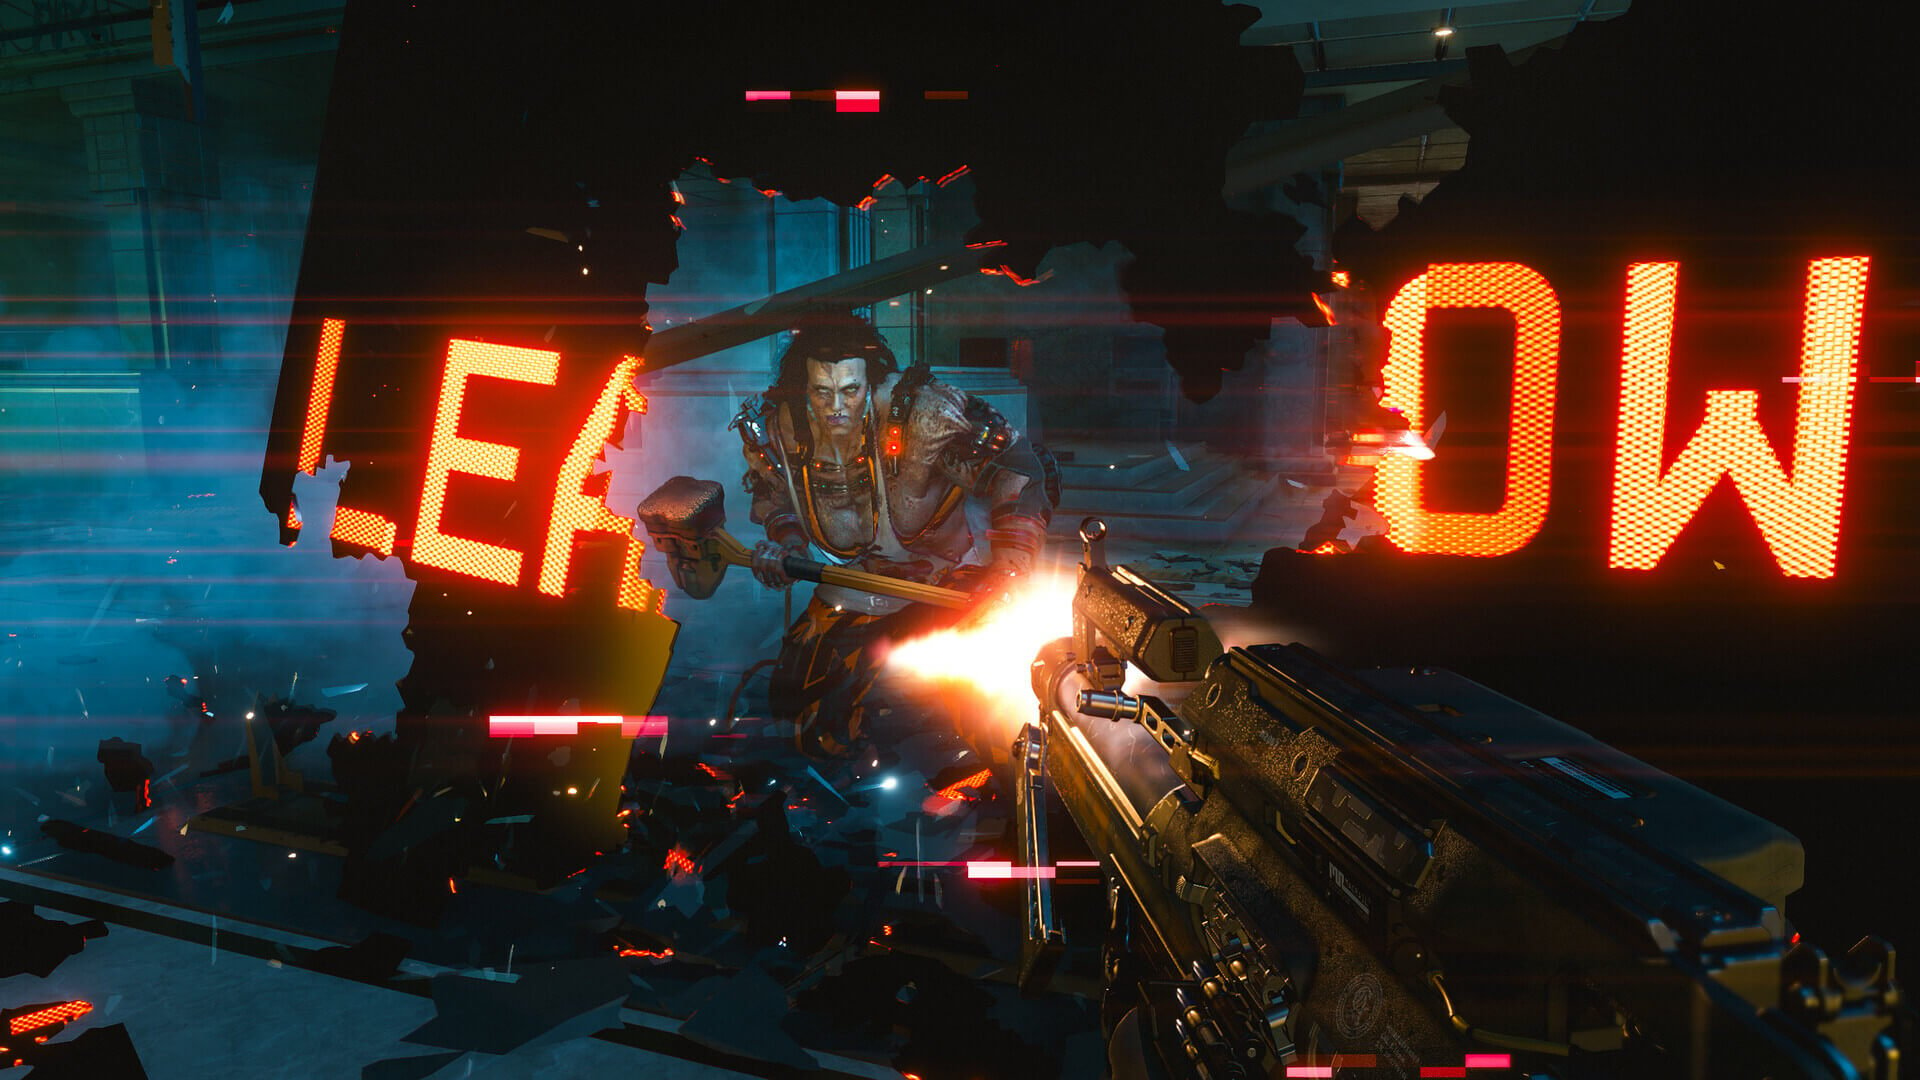 A cyberpsycho smashing through a sign in Cyberpunk 2077